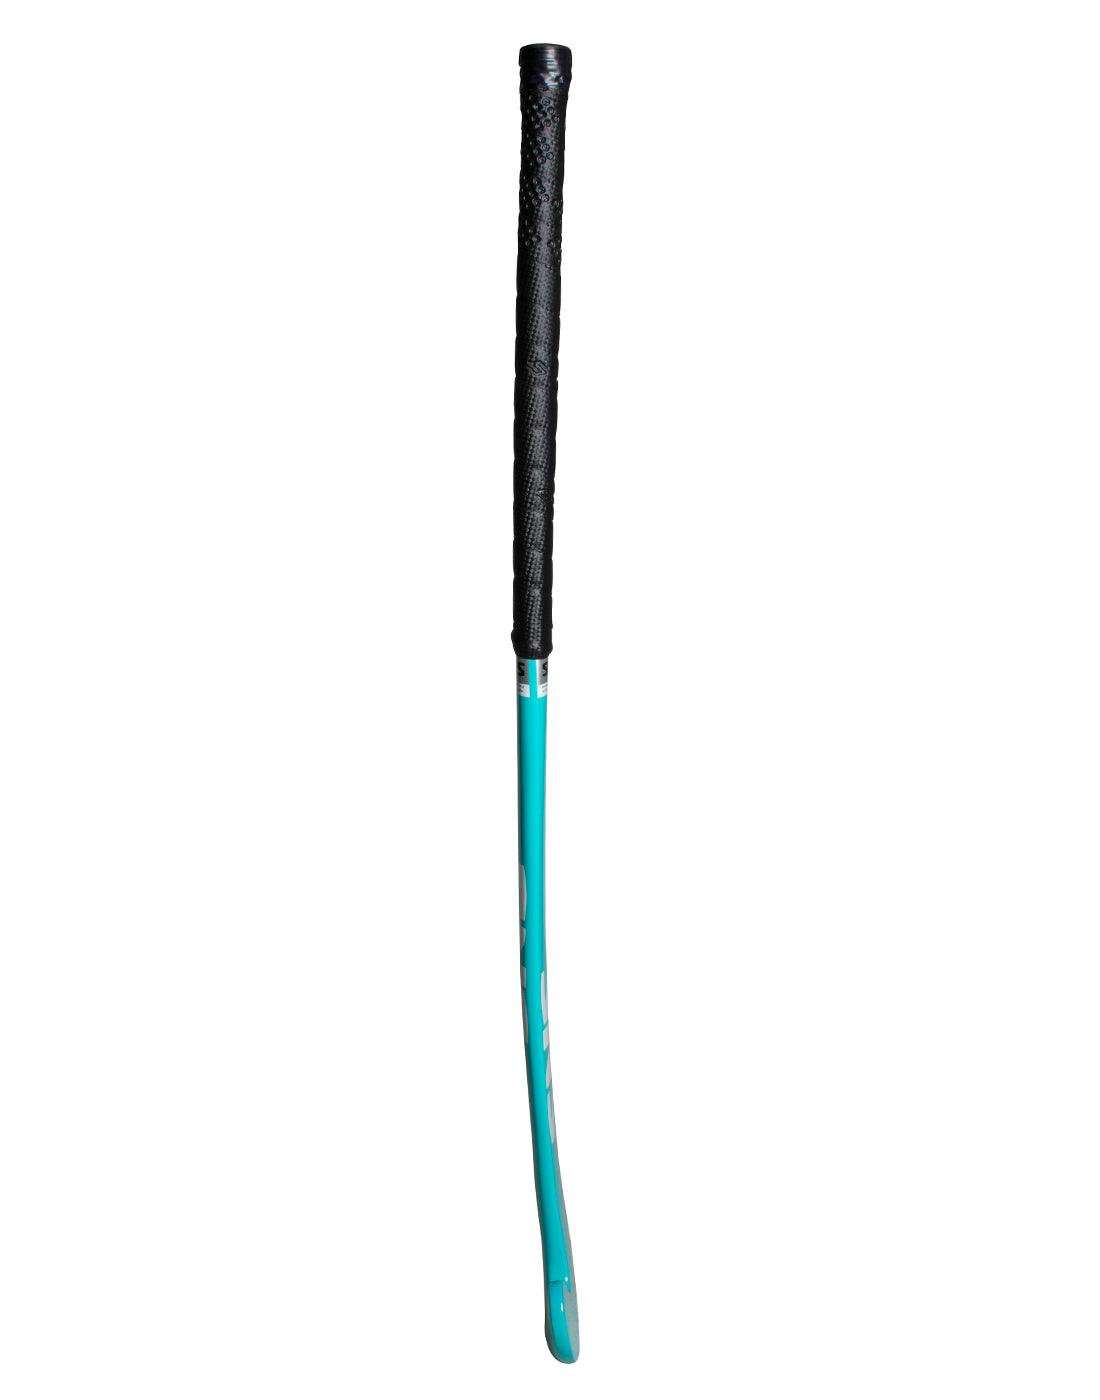 SNS Xenon Wooden Hockey Stick (Sky Blue)- Mill Sports 